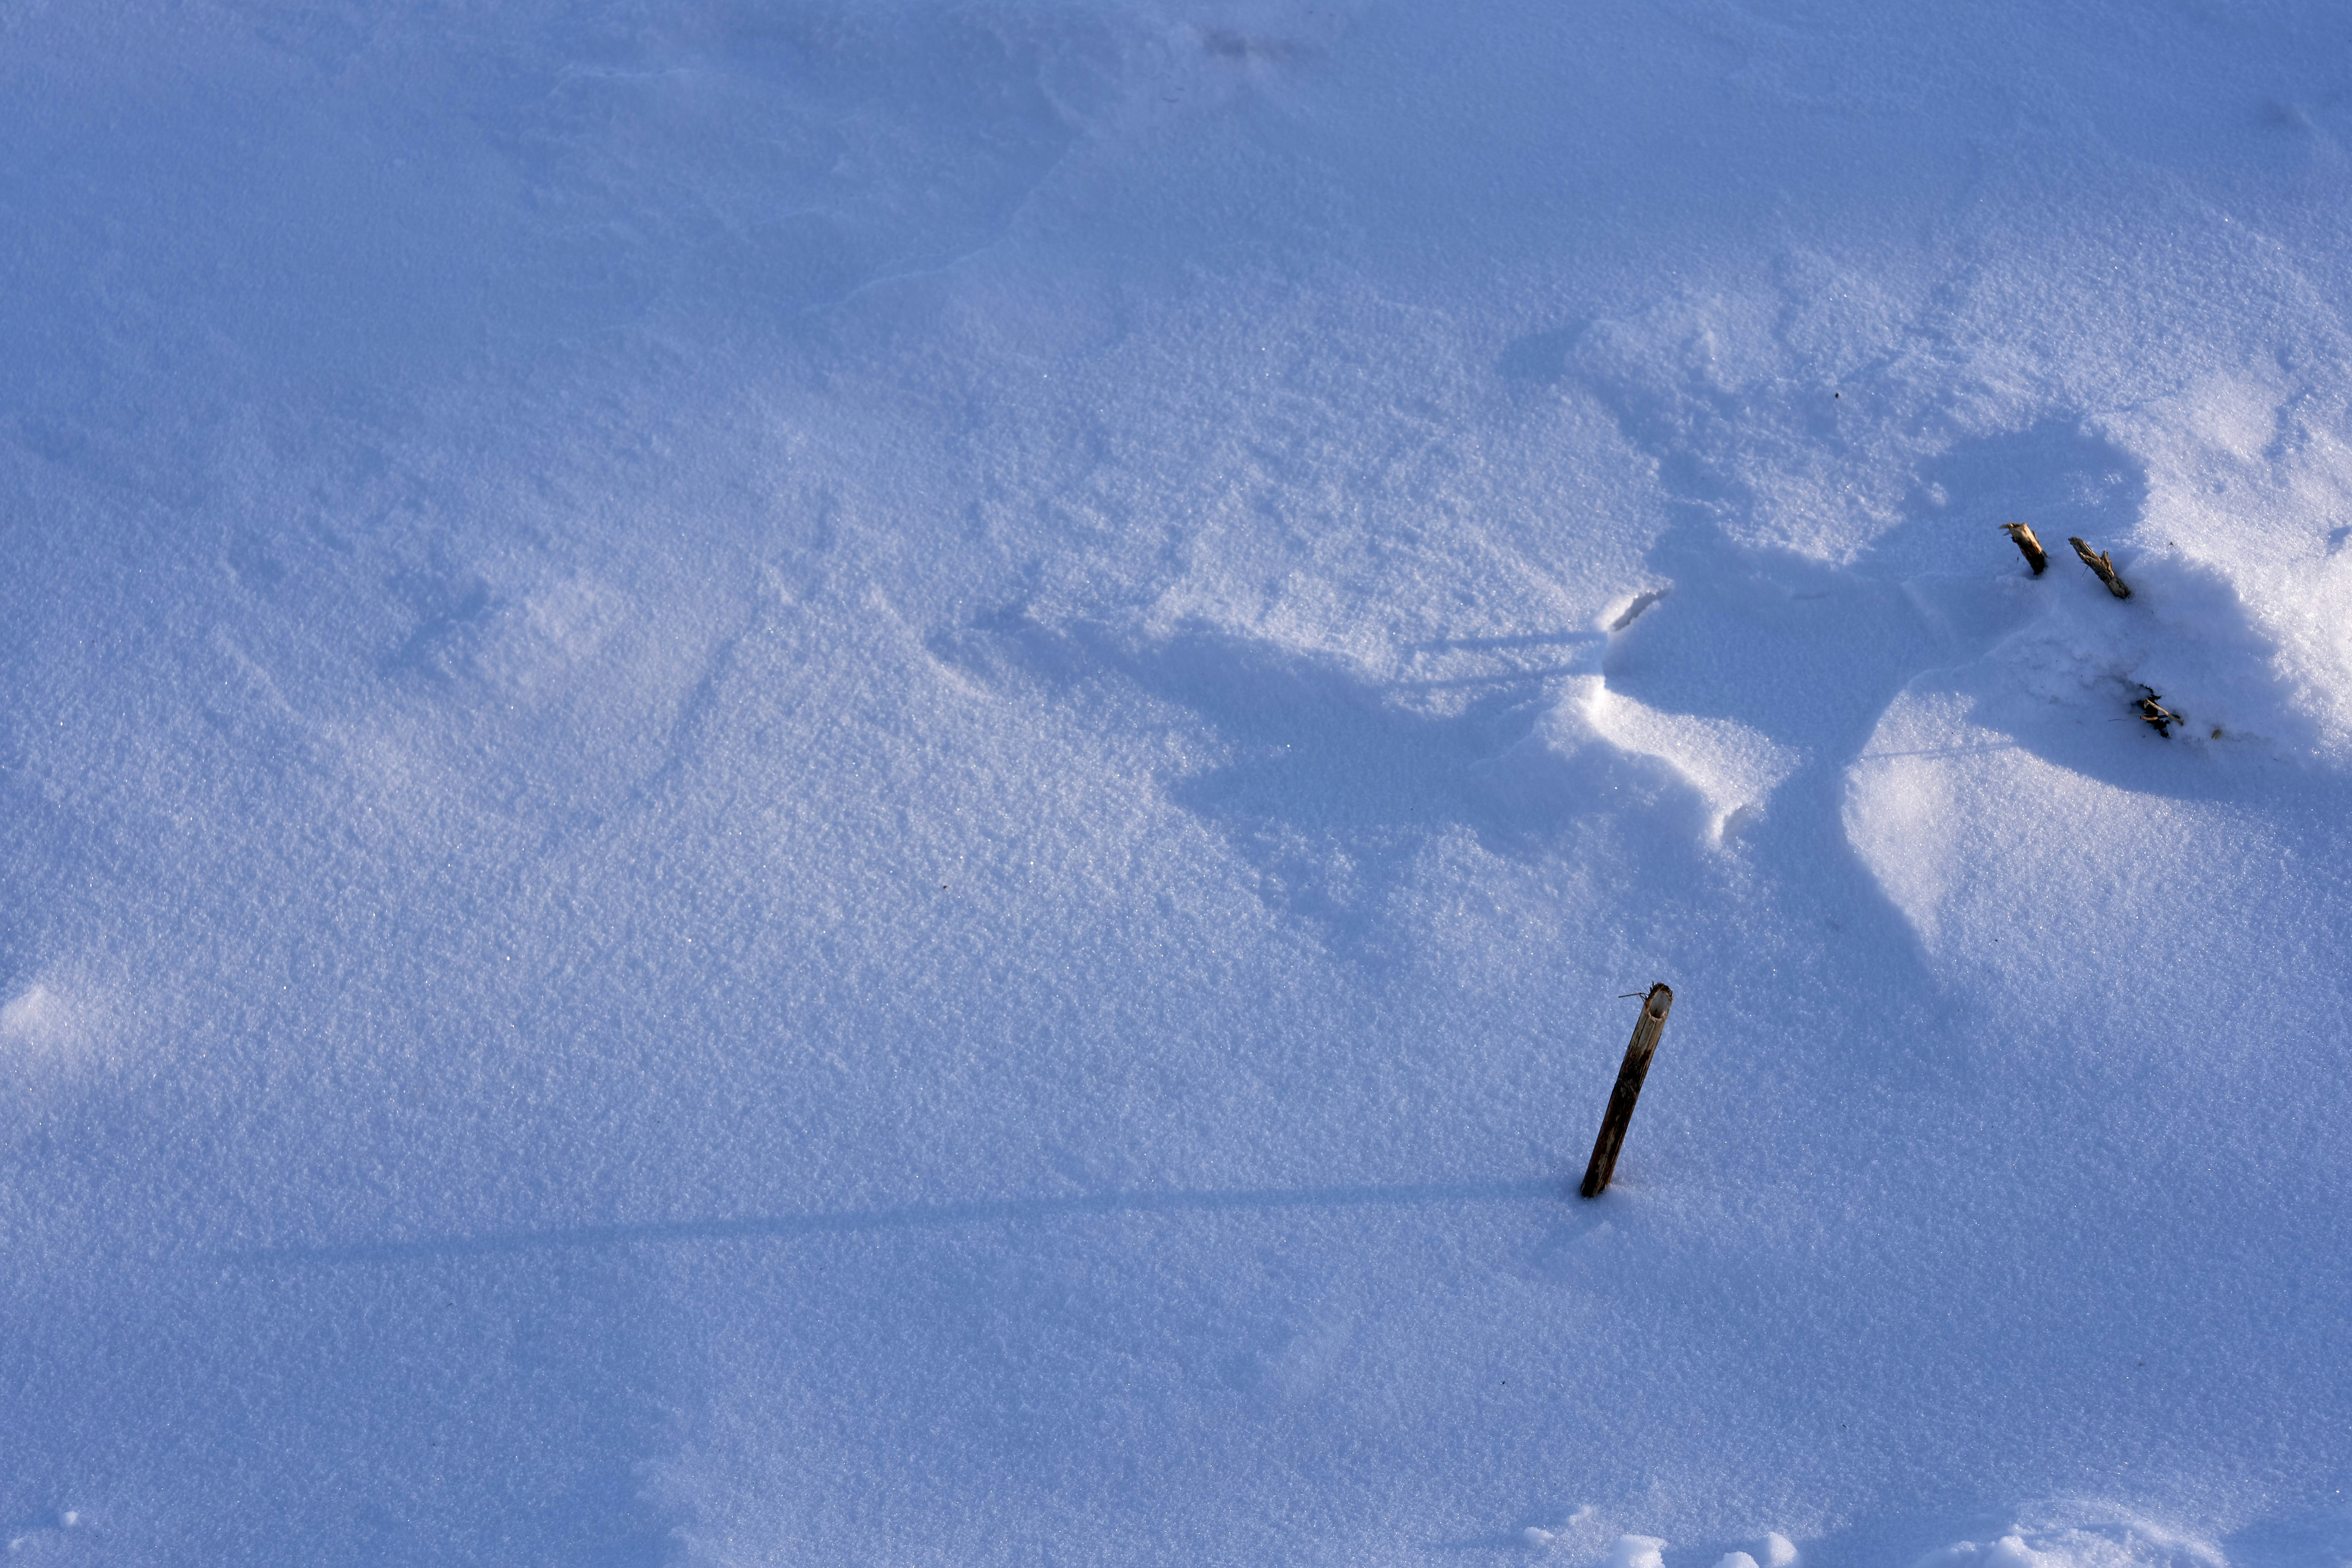 black metal bar on snow covered ground